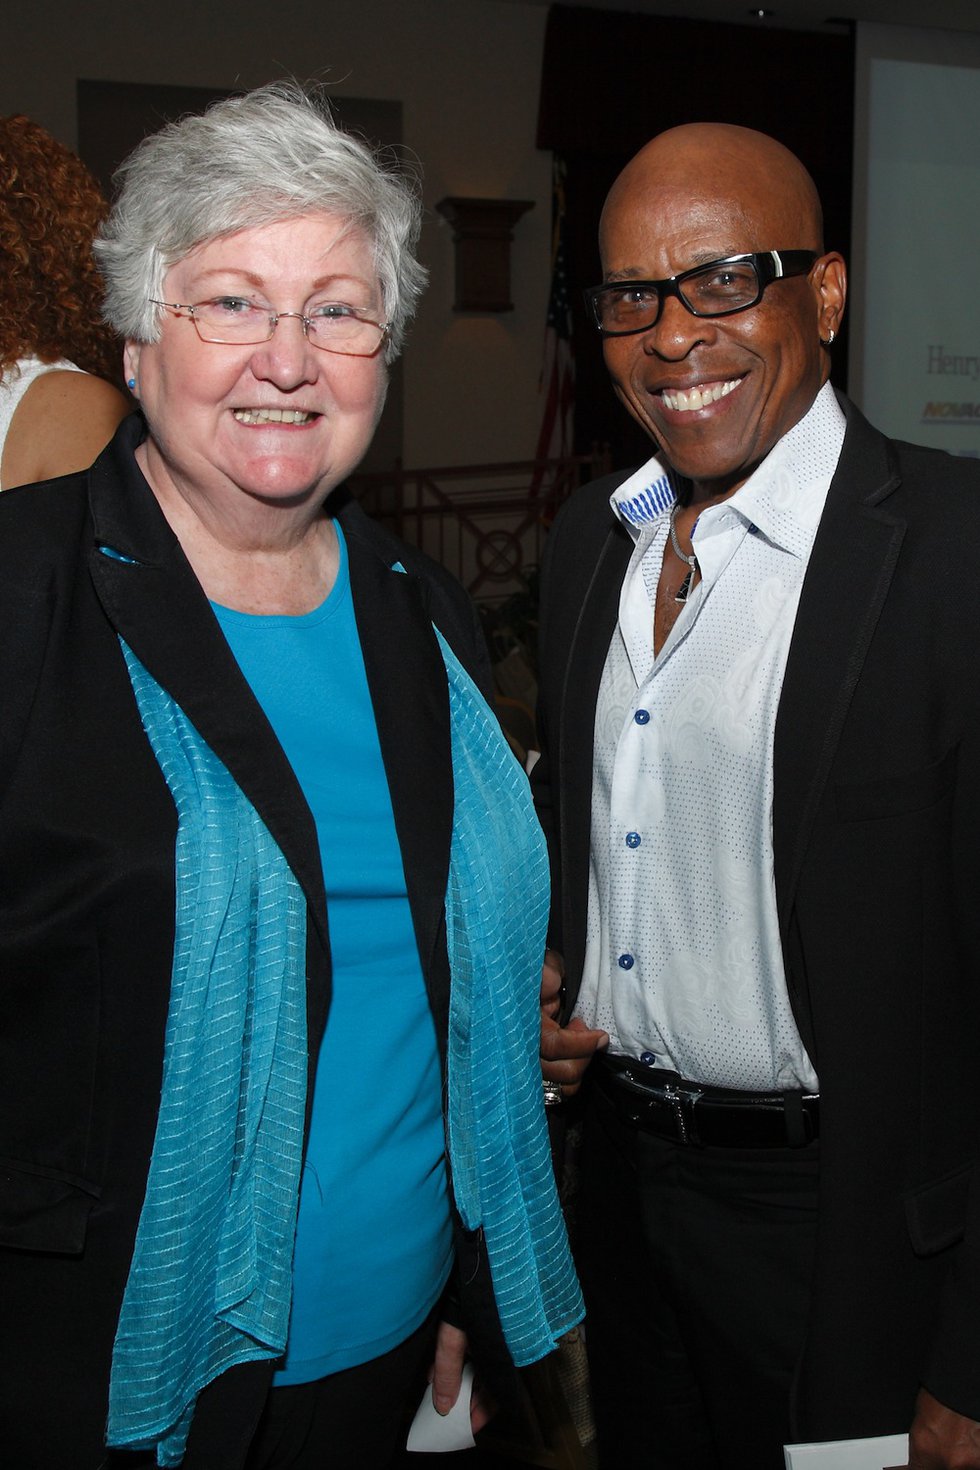 Mayor Sharon Goldsworthy and David Porter